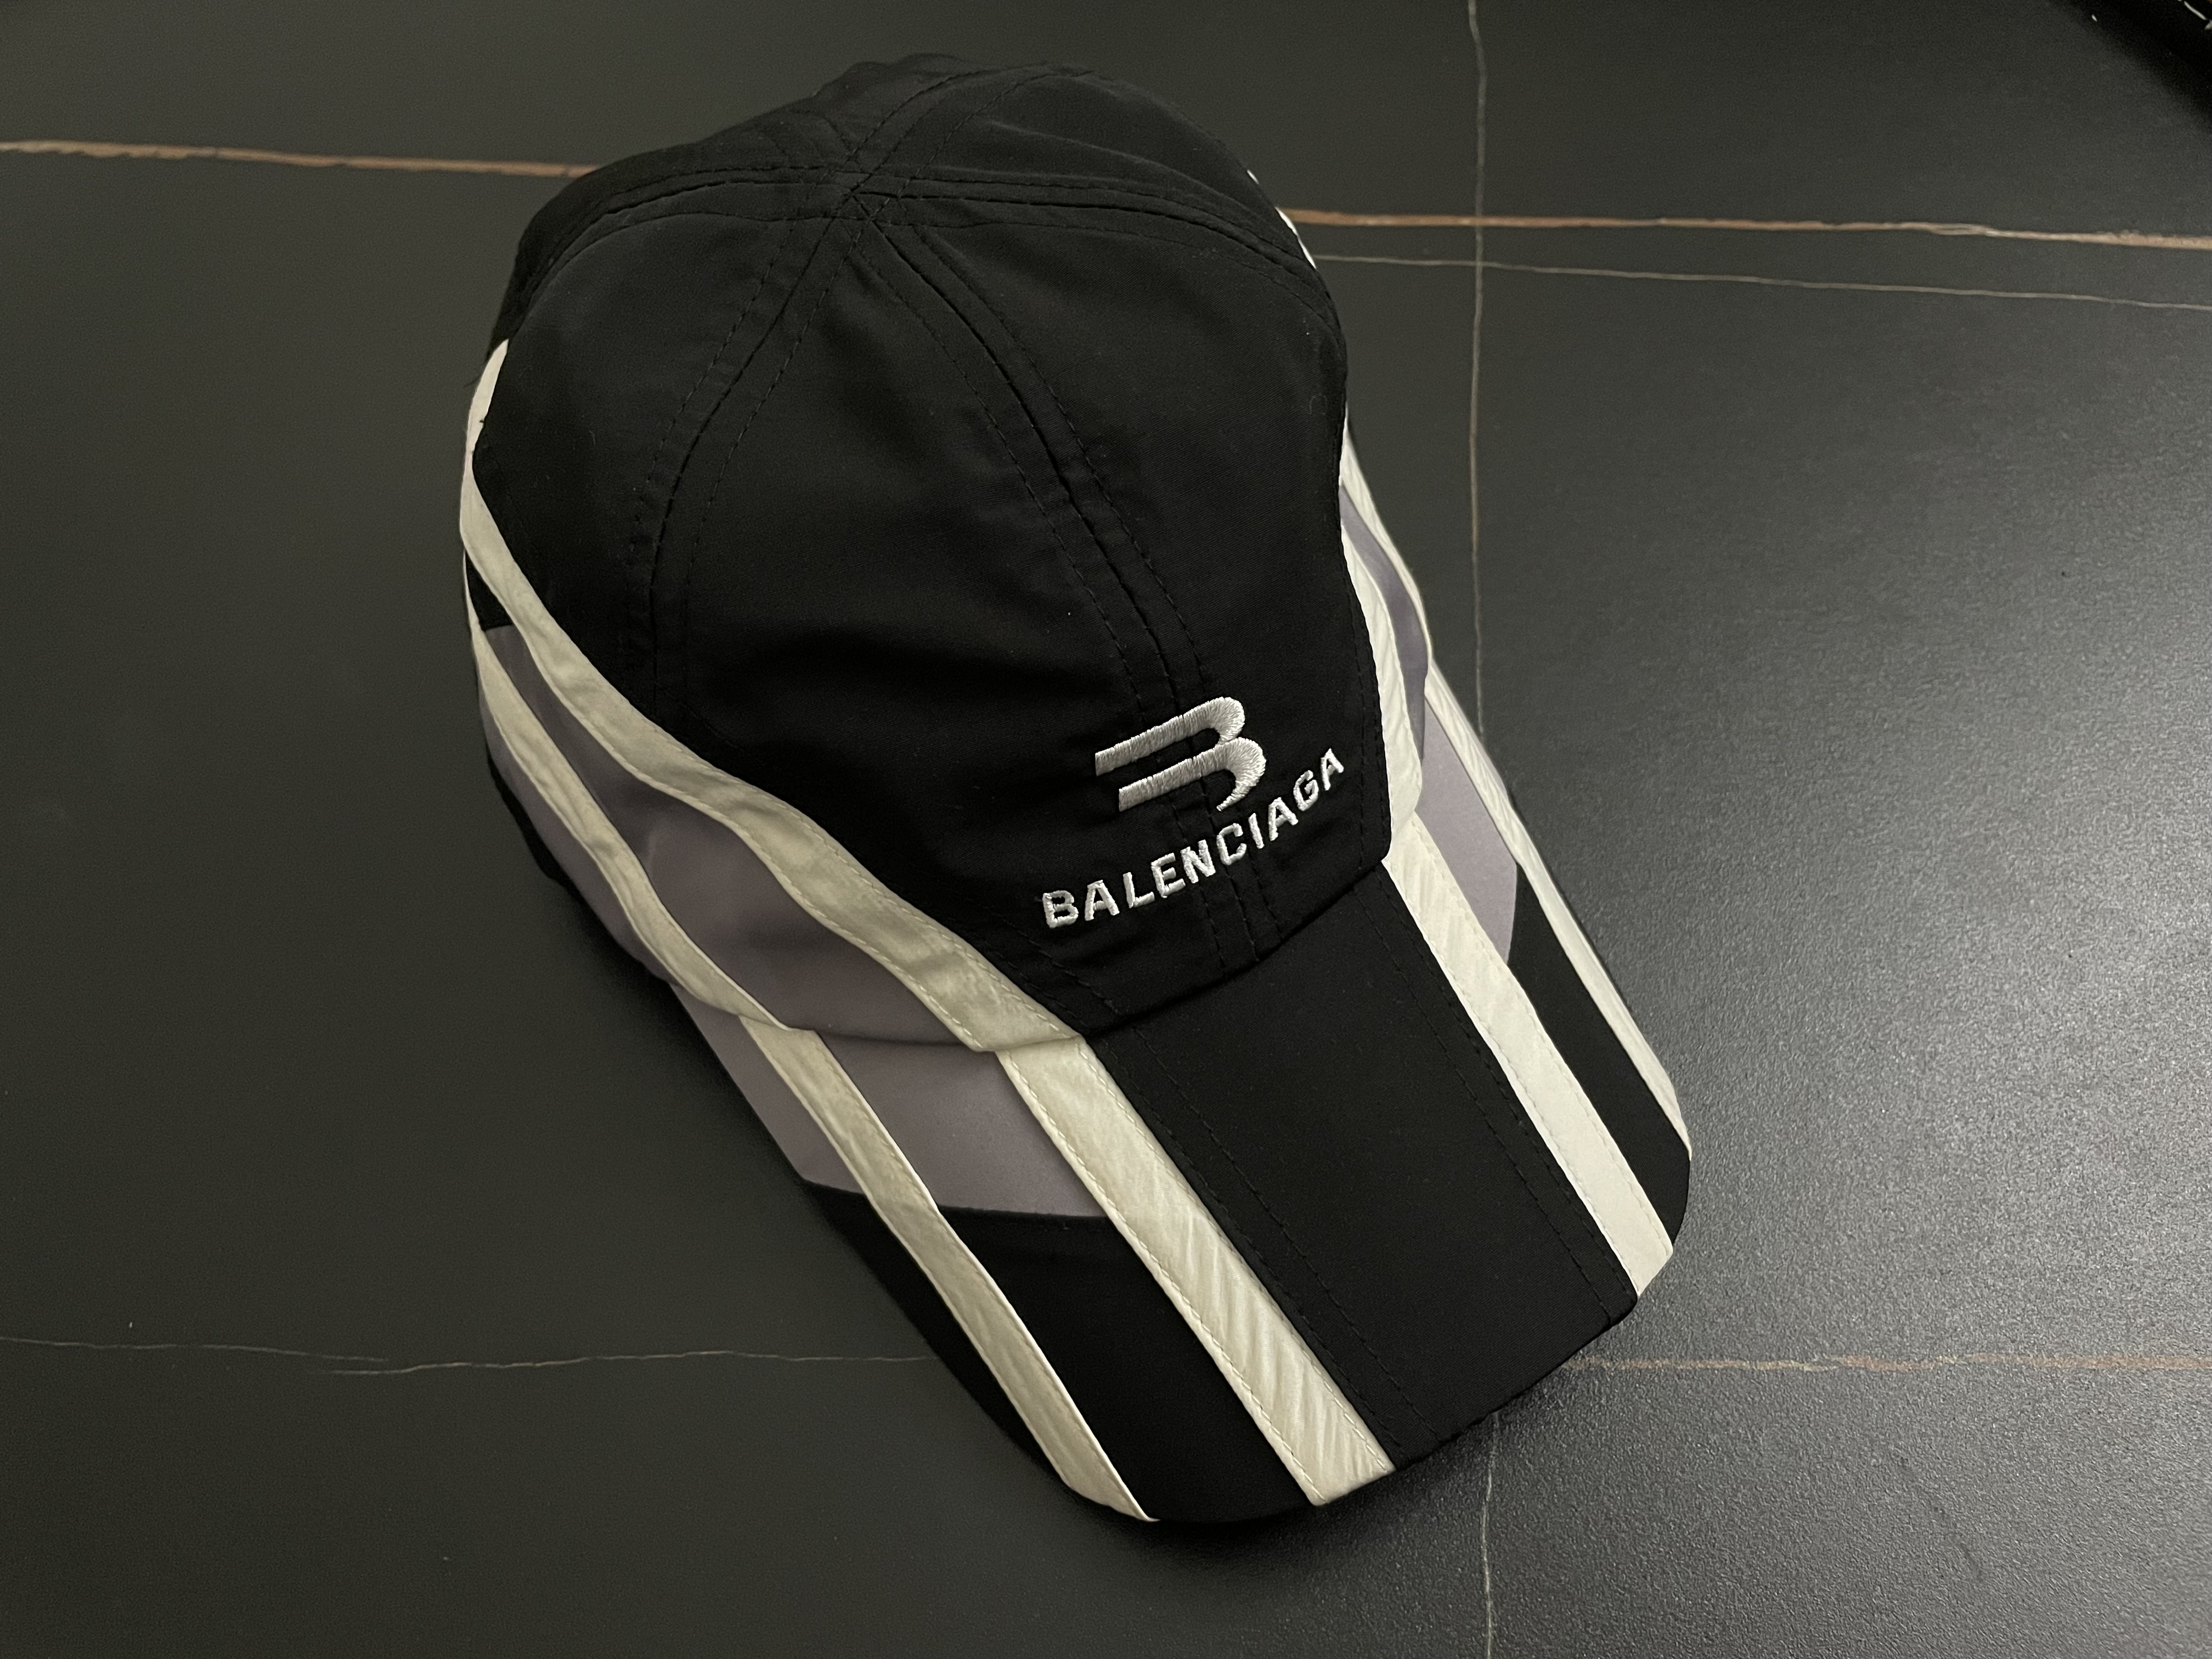 Balenciaga Tracksuit Striped Baseball Hat is key to style.